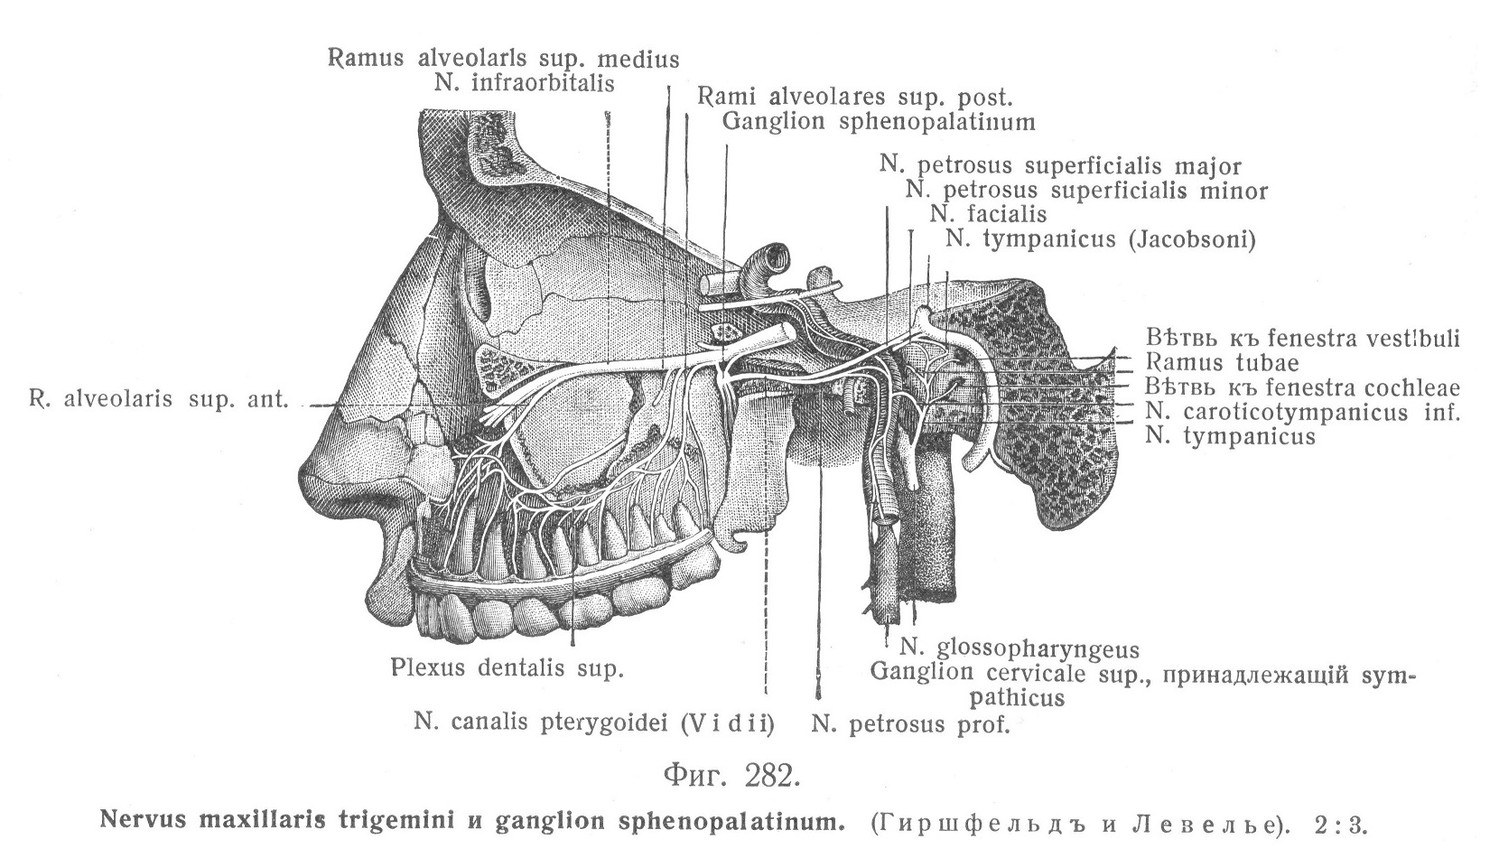 Ganglion sphenopalatinum